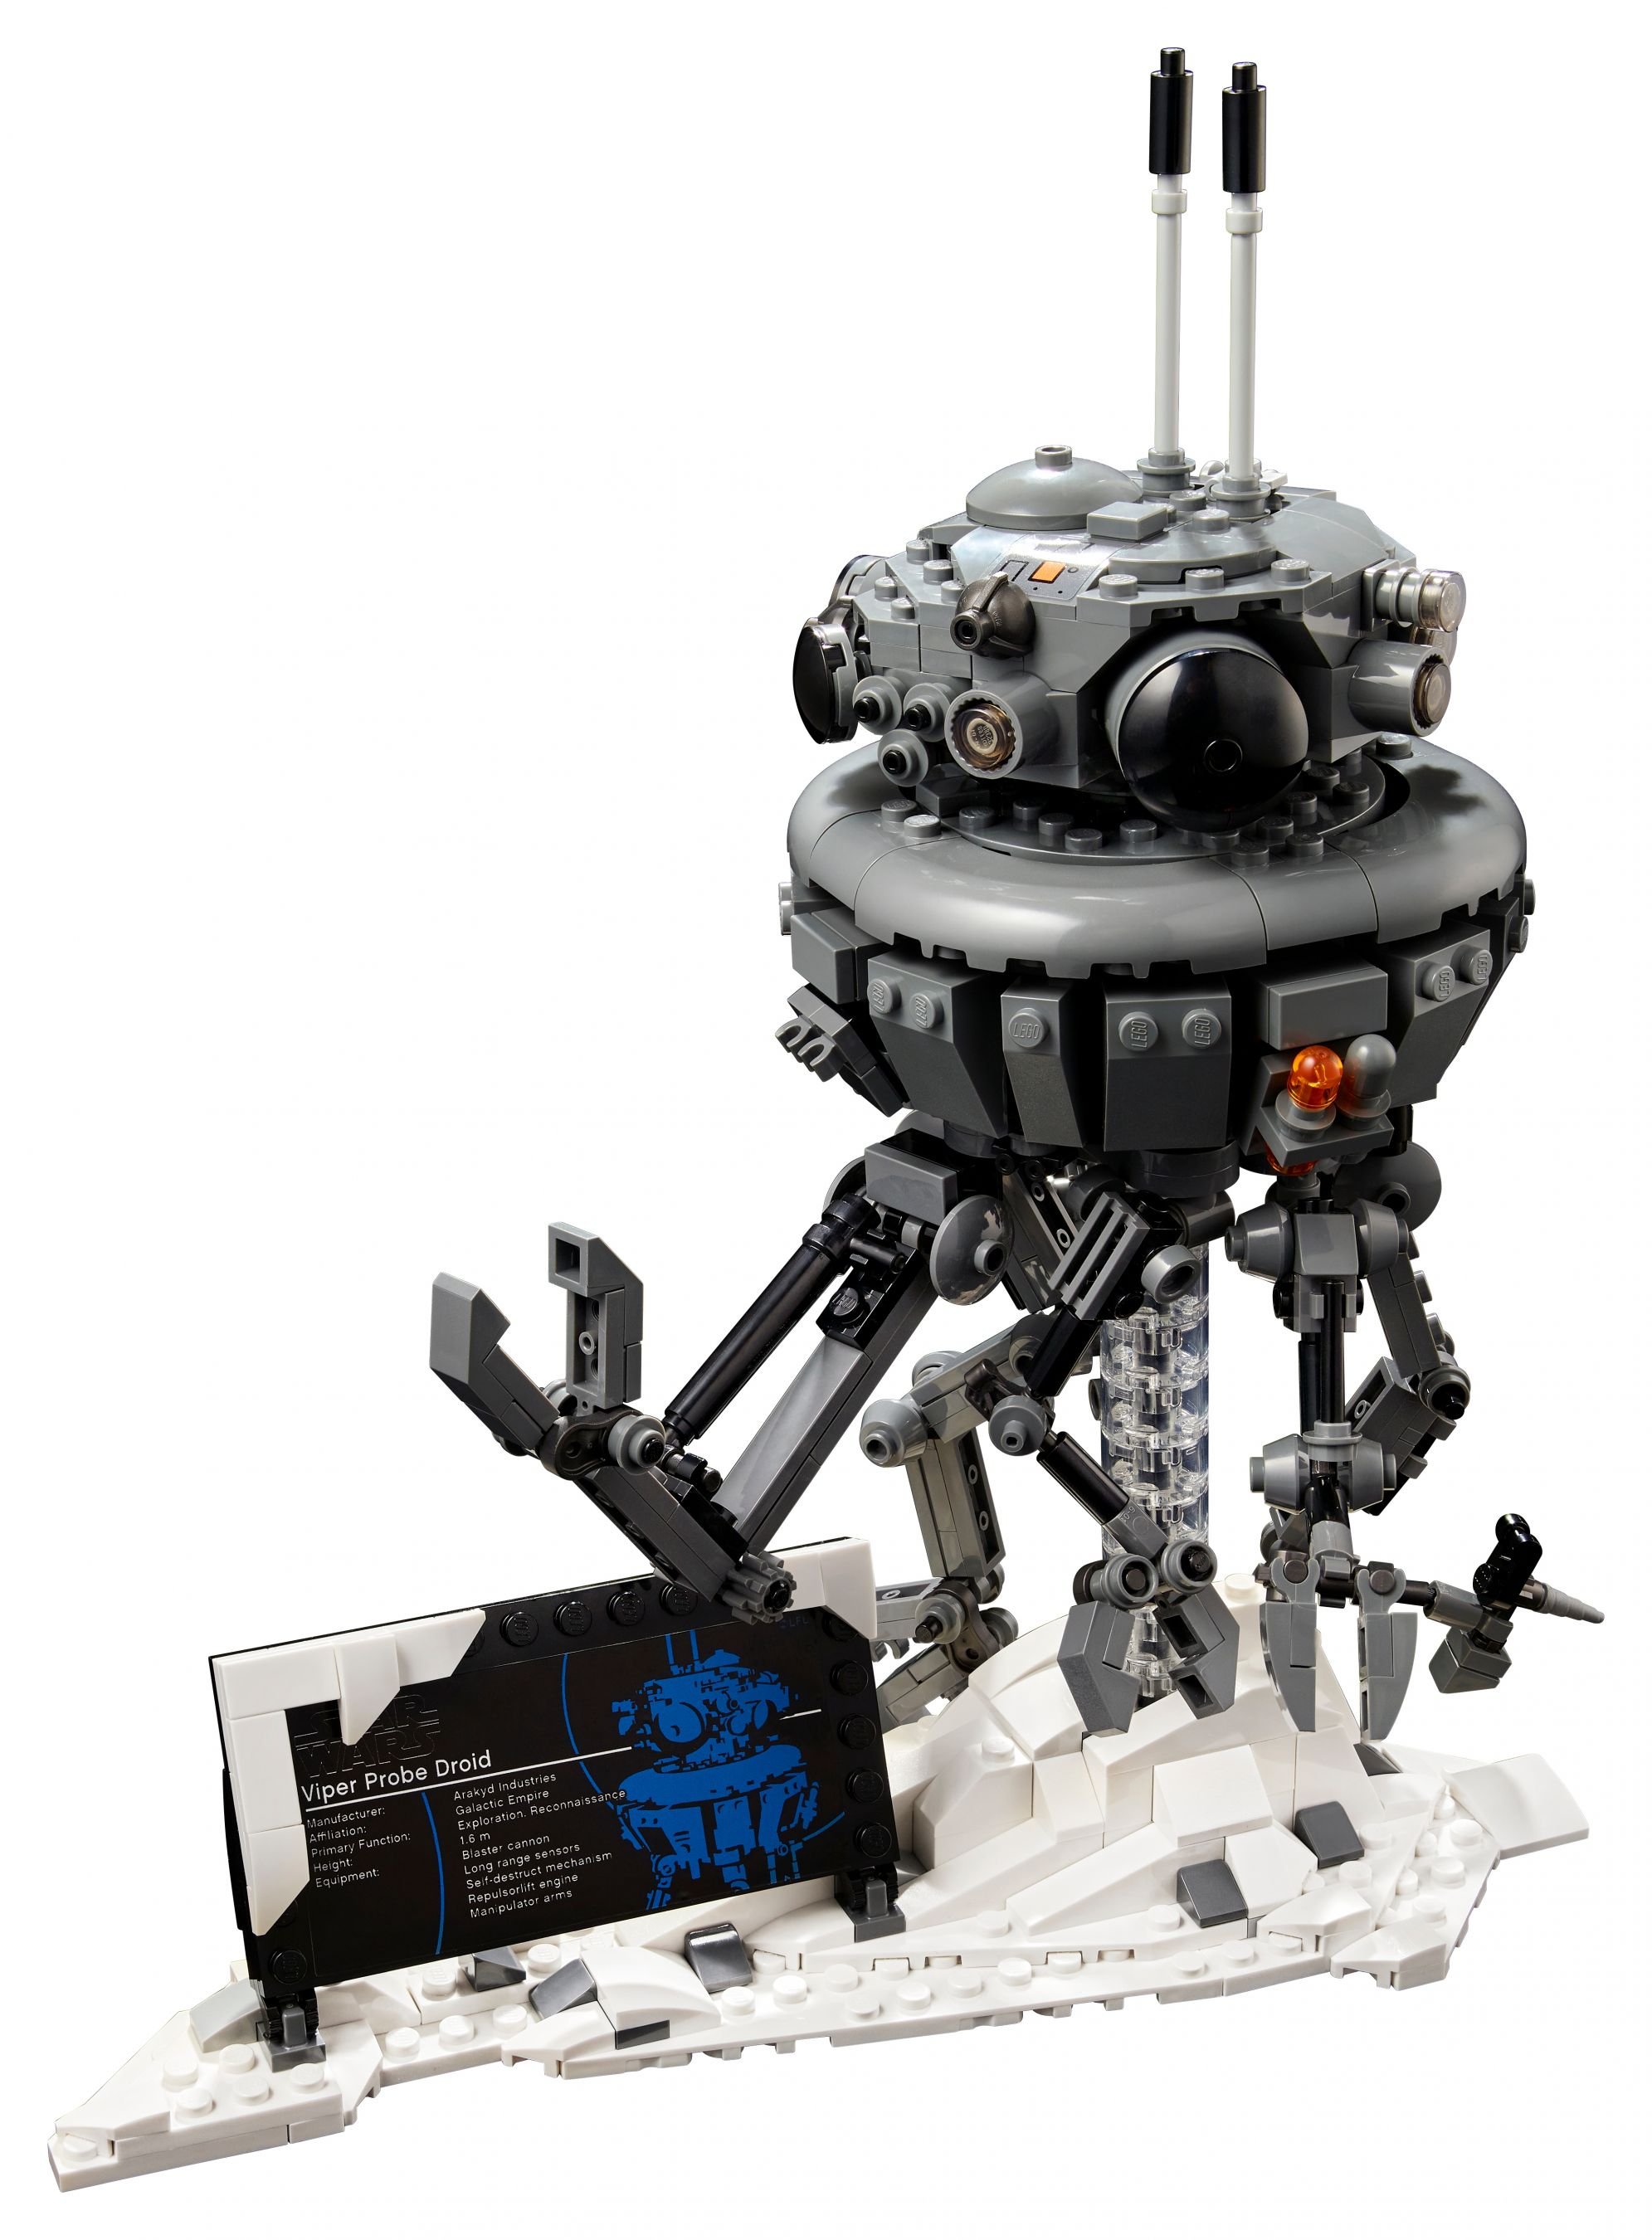 LEGO Star Wars 75306 Imperialer Suchdroide LEGO_75306_alt2.jpg